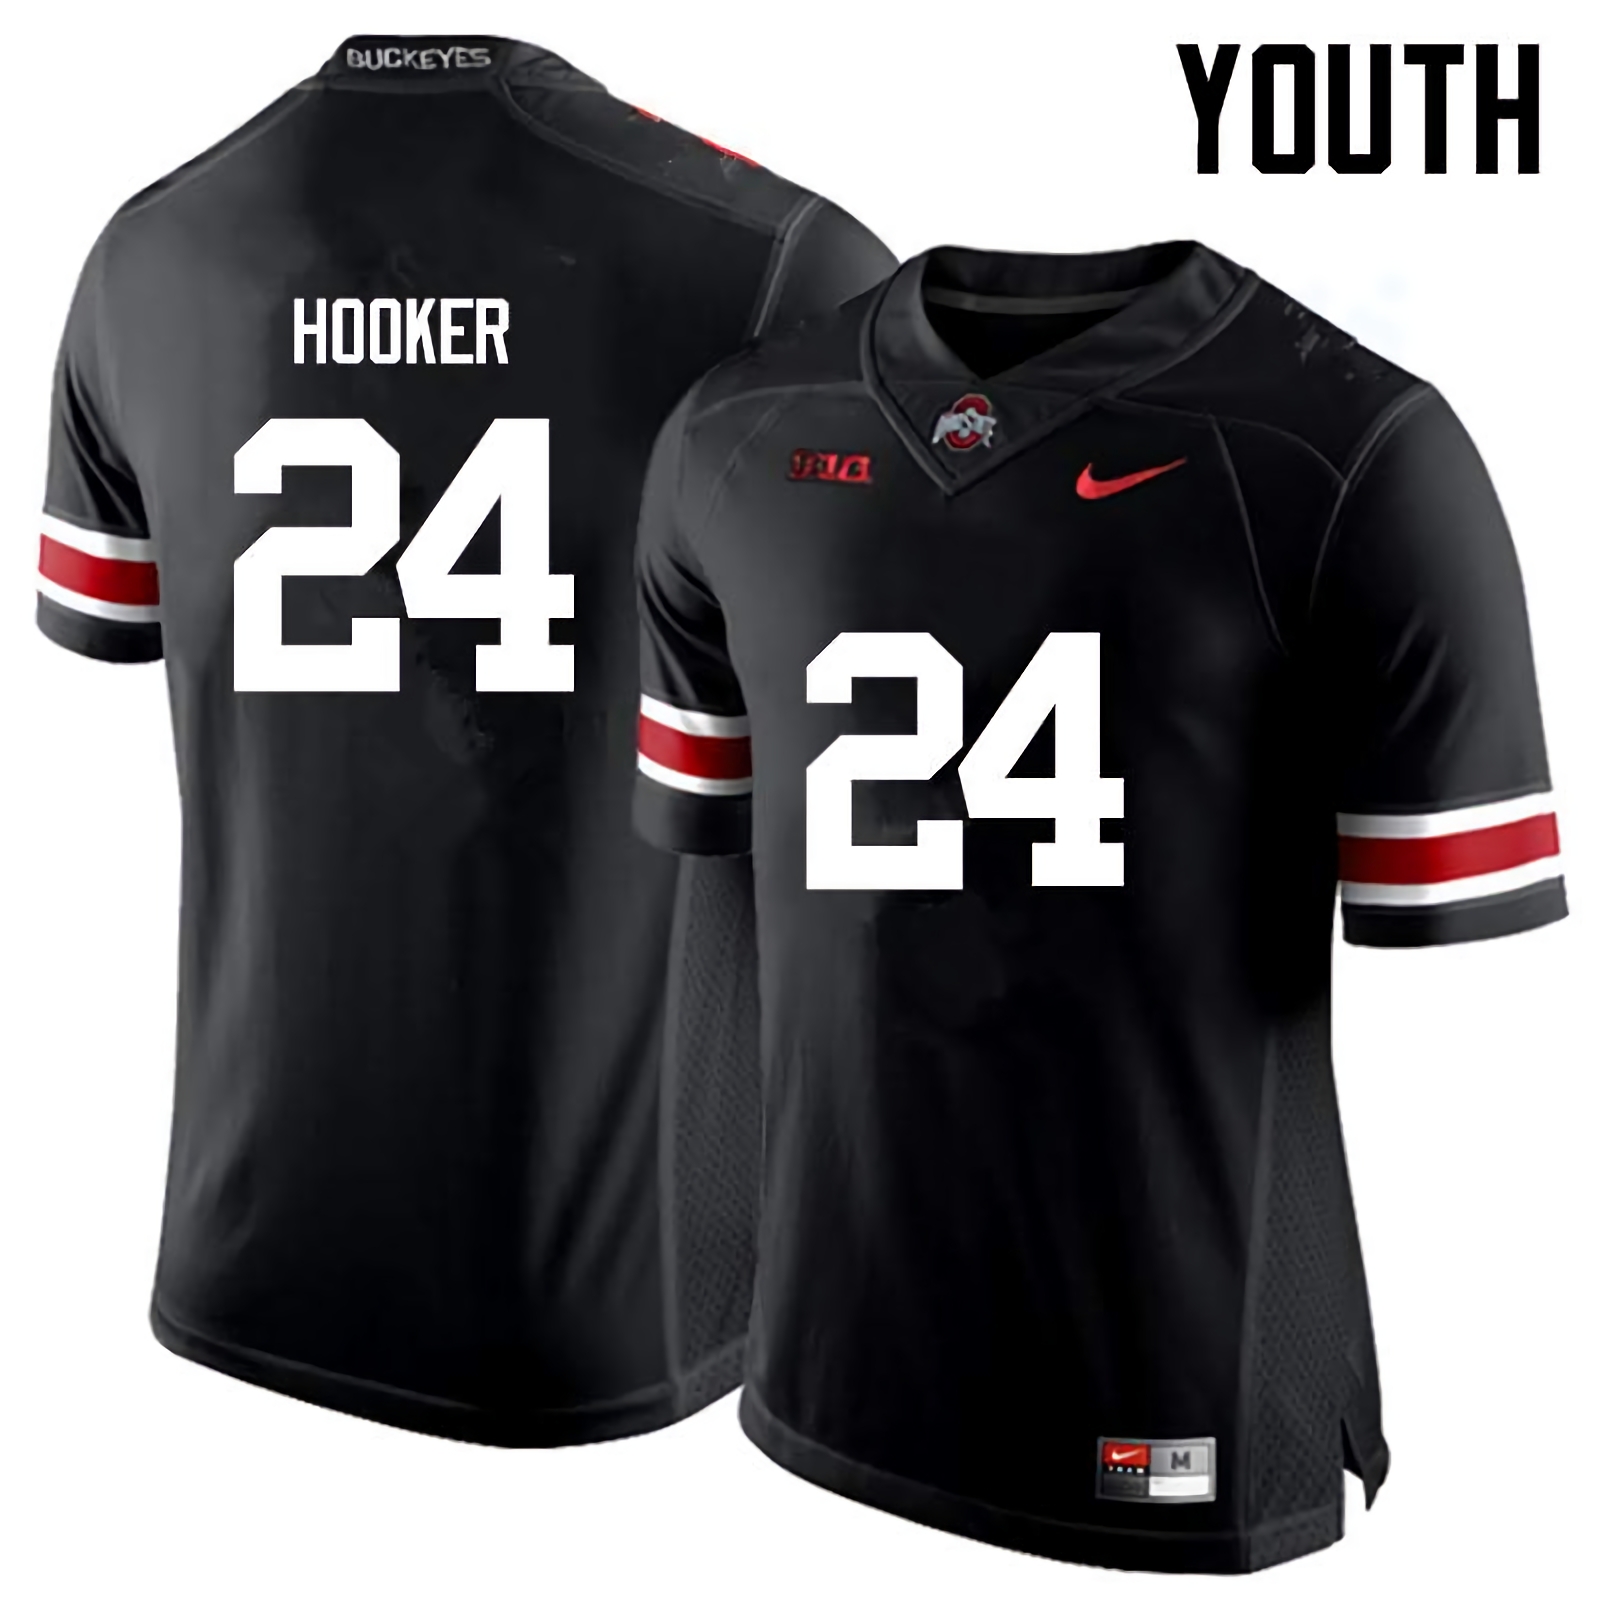 Malik Hooker Ohio State Buckeyes Youth NCAA #24 Nike Black College Stitched Football Jersey OMV2456ML